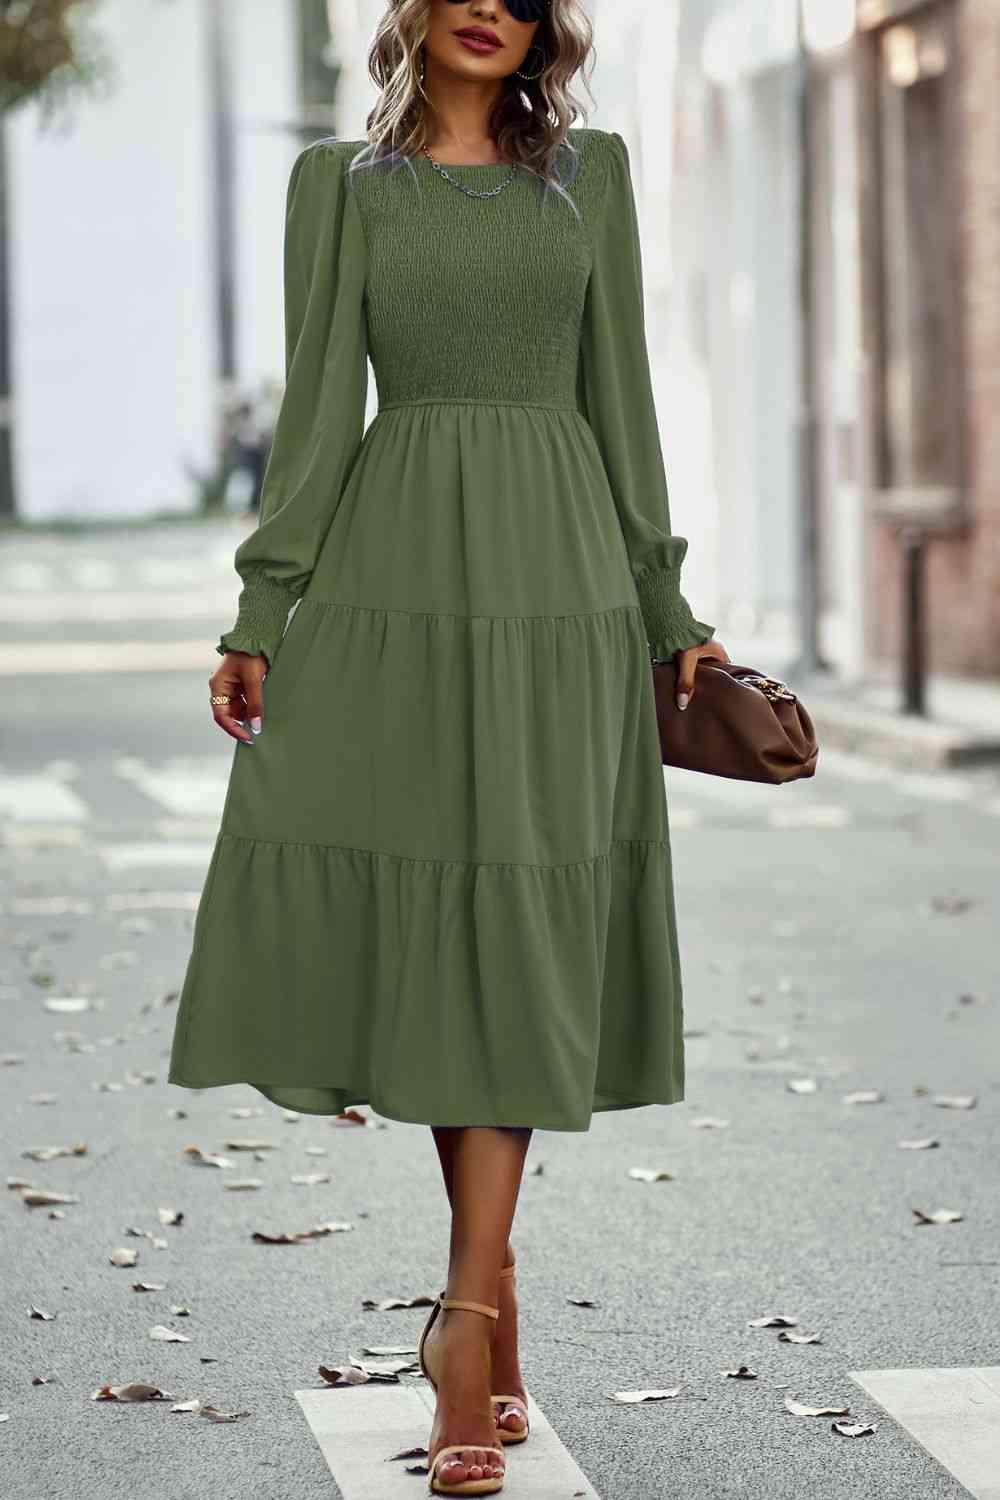 a woman in a green dress is walking down the street